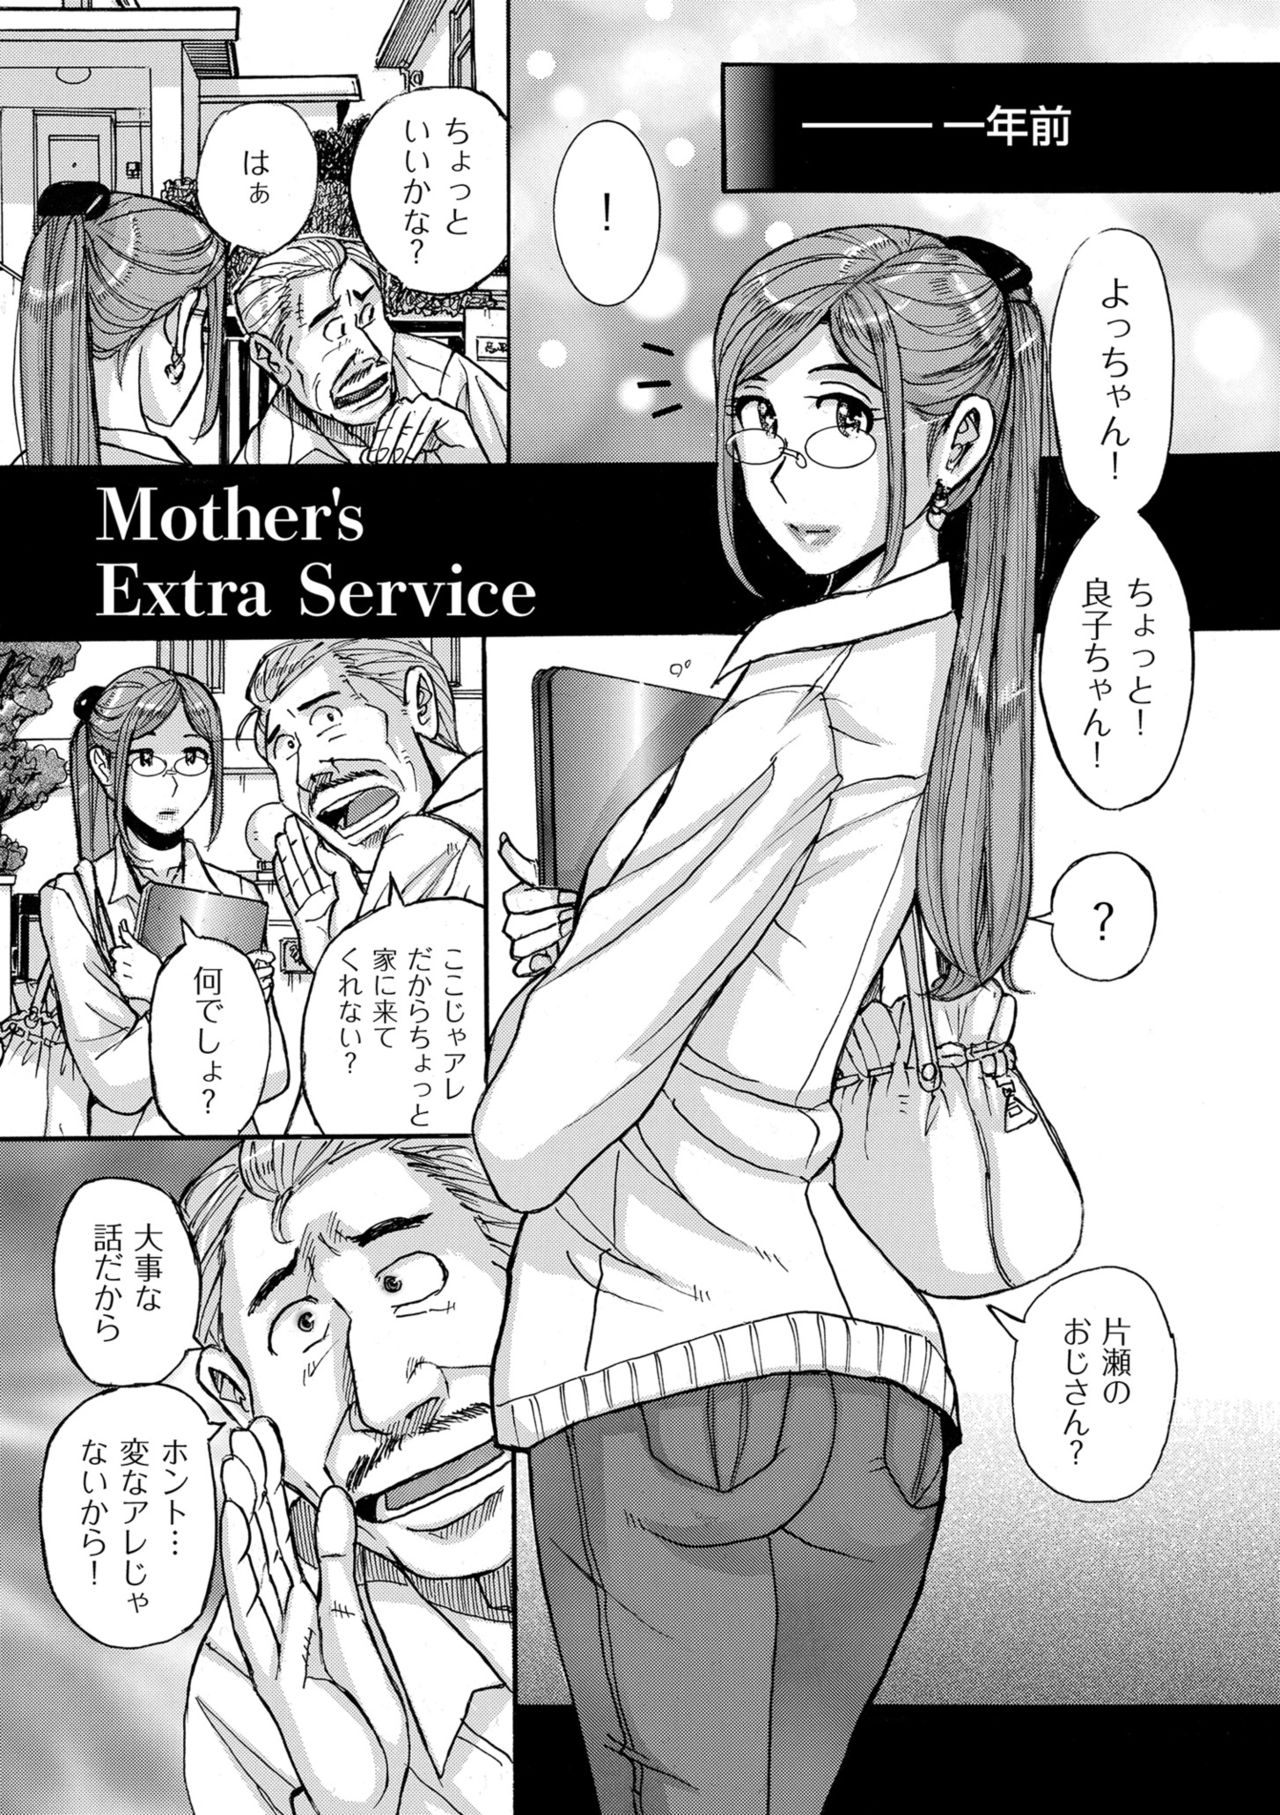 [児島未生] Mother’s Care Service [DL版]